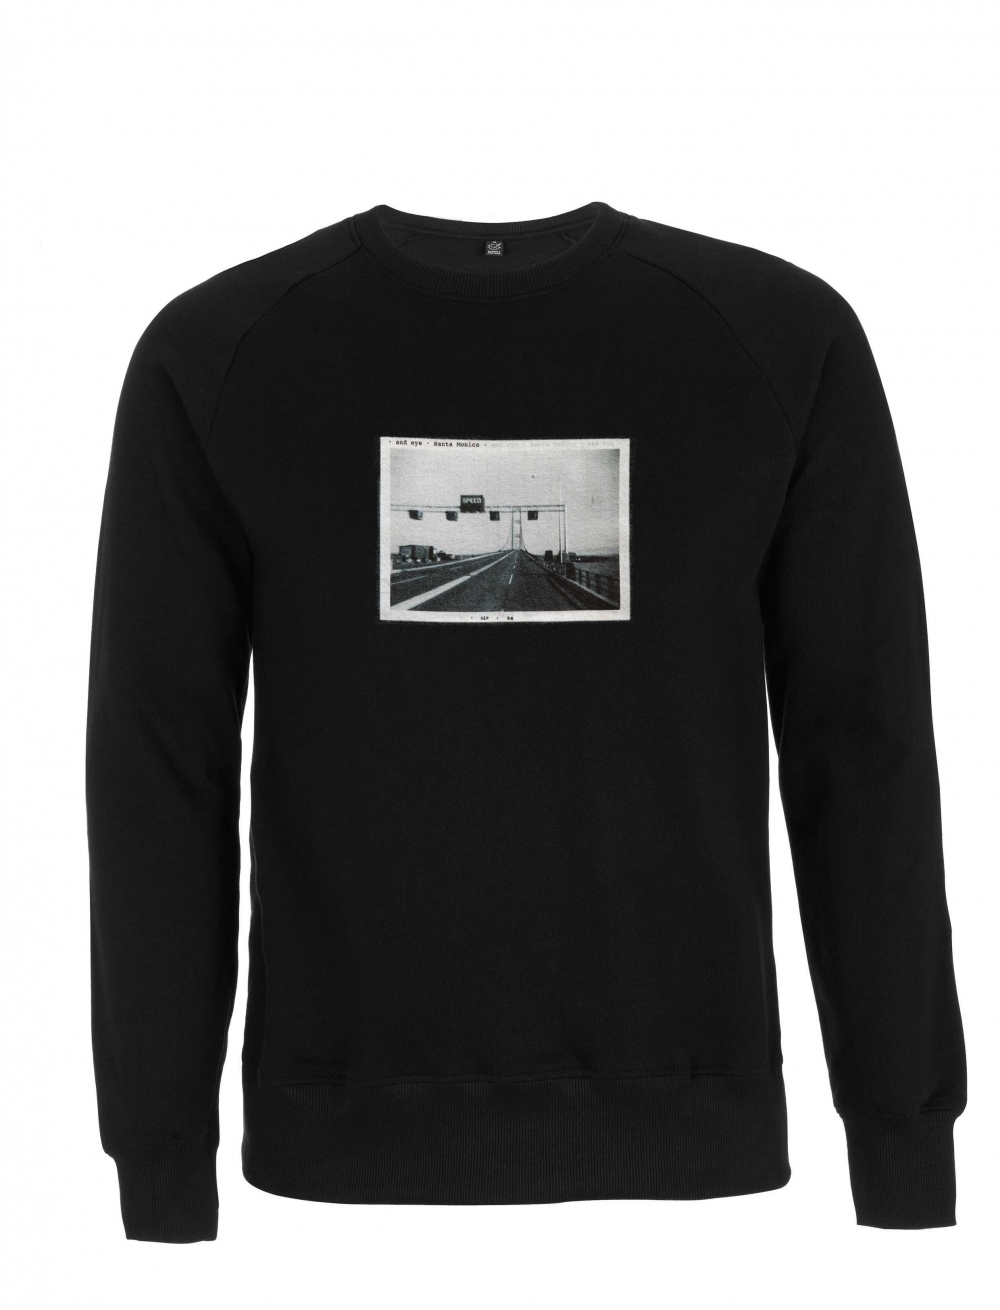 Organic cotton sweatshirt with a vintage image